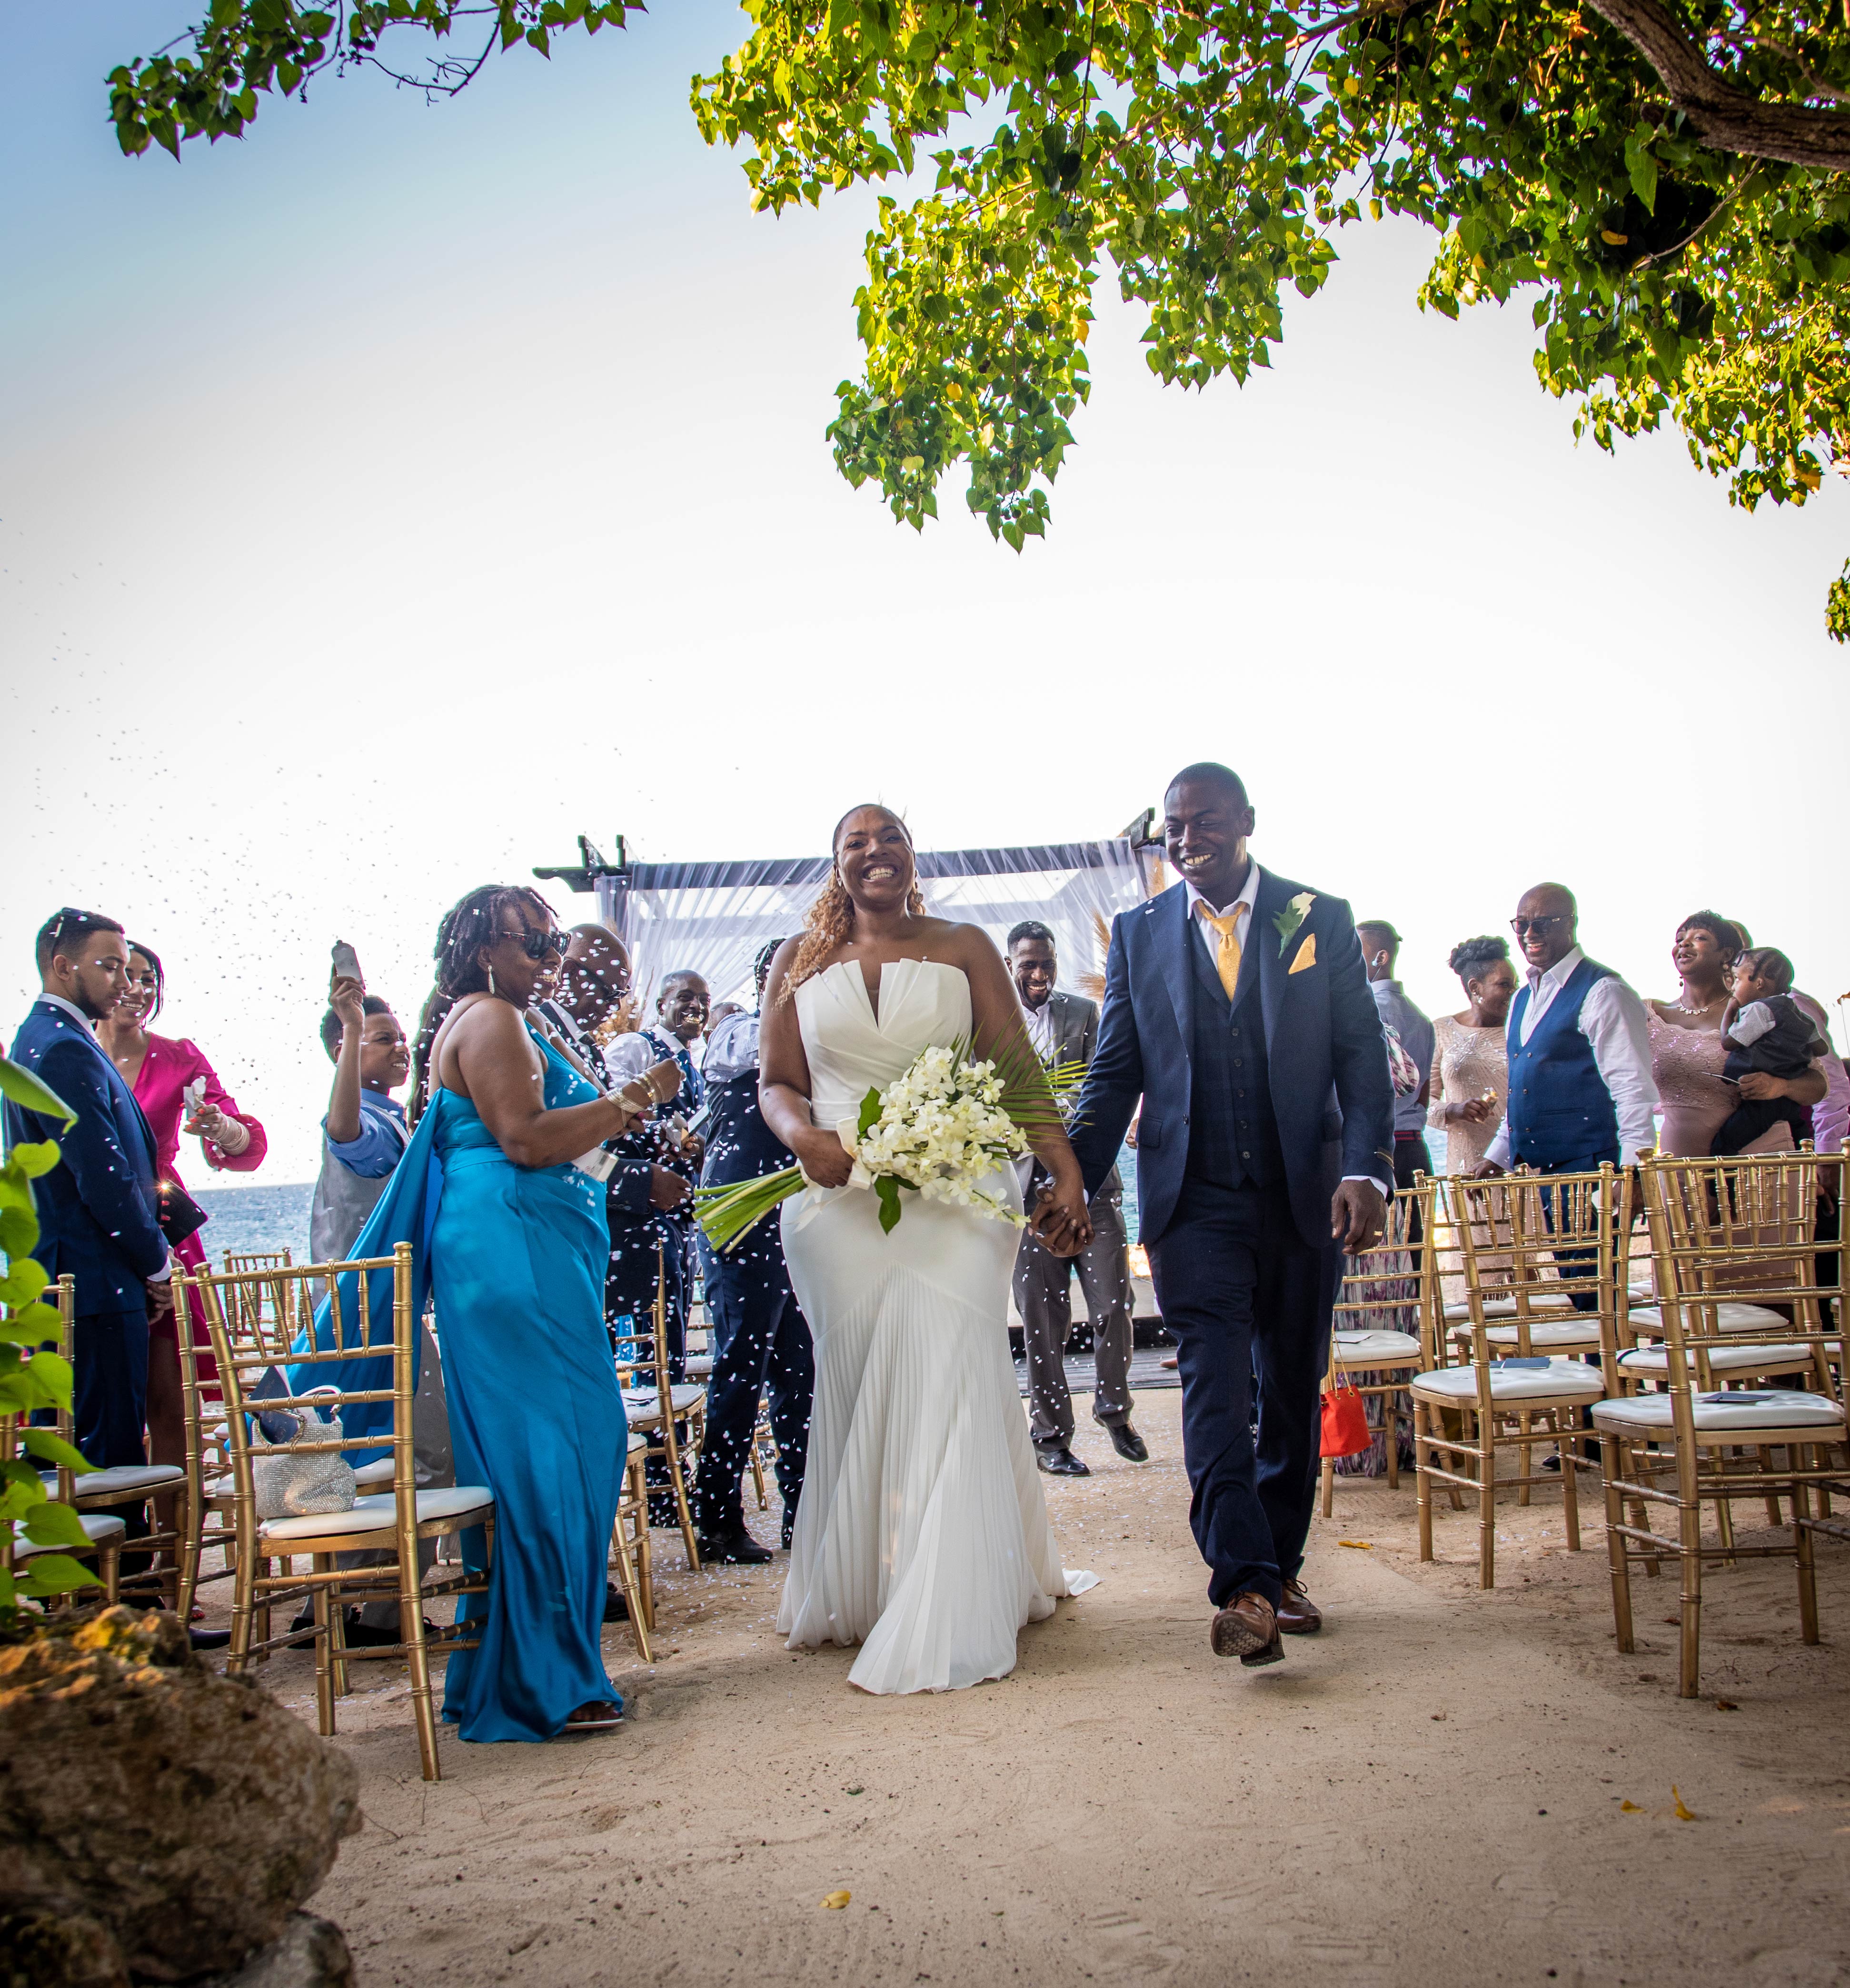 Award-Winning Wedding Planning for Sun-Seeking Couples Dreaming of a Heartfelt Celebration in the Caribbean